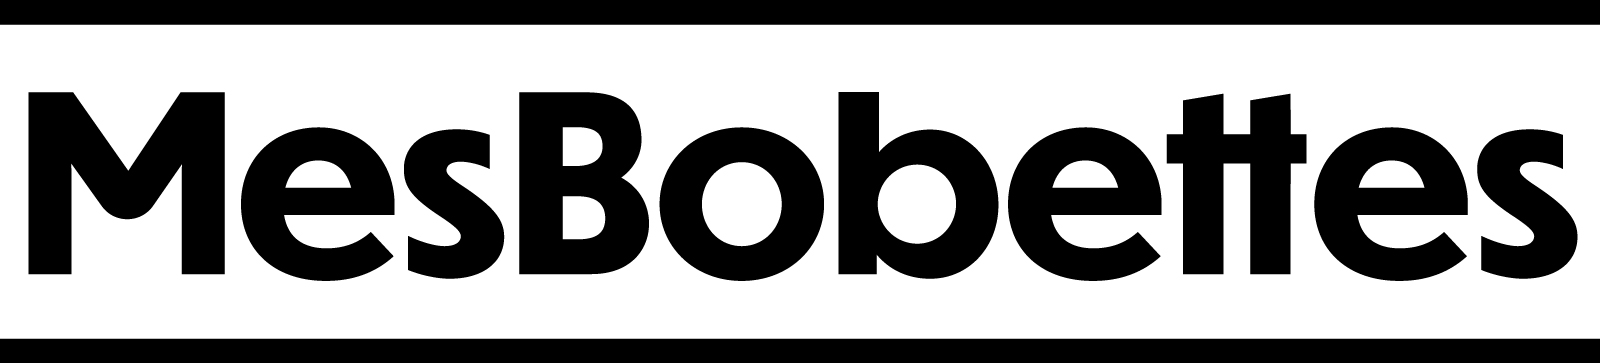 MesBobettes logo